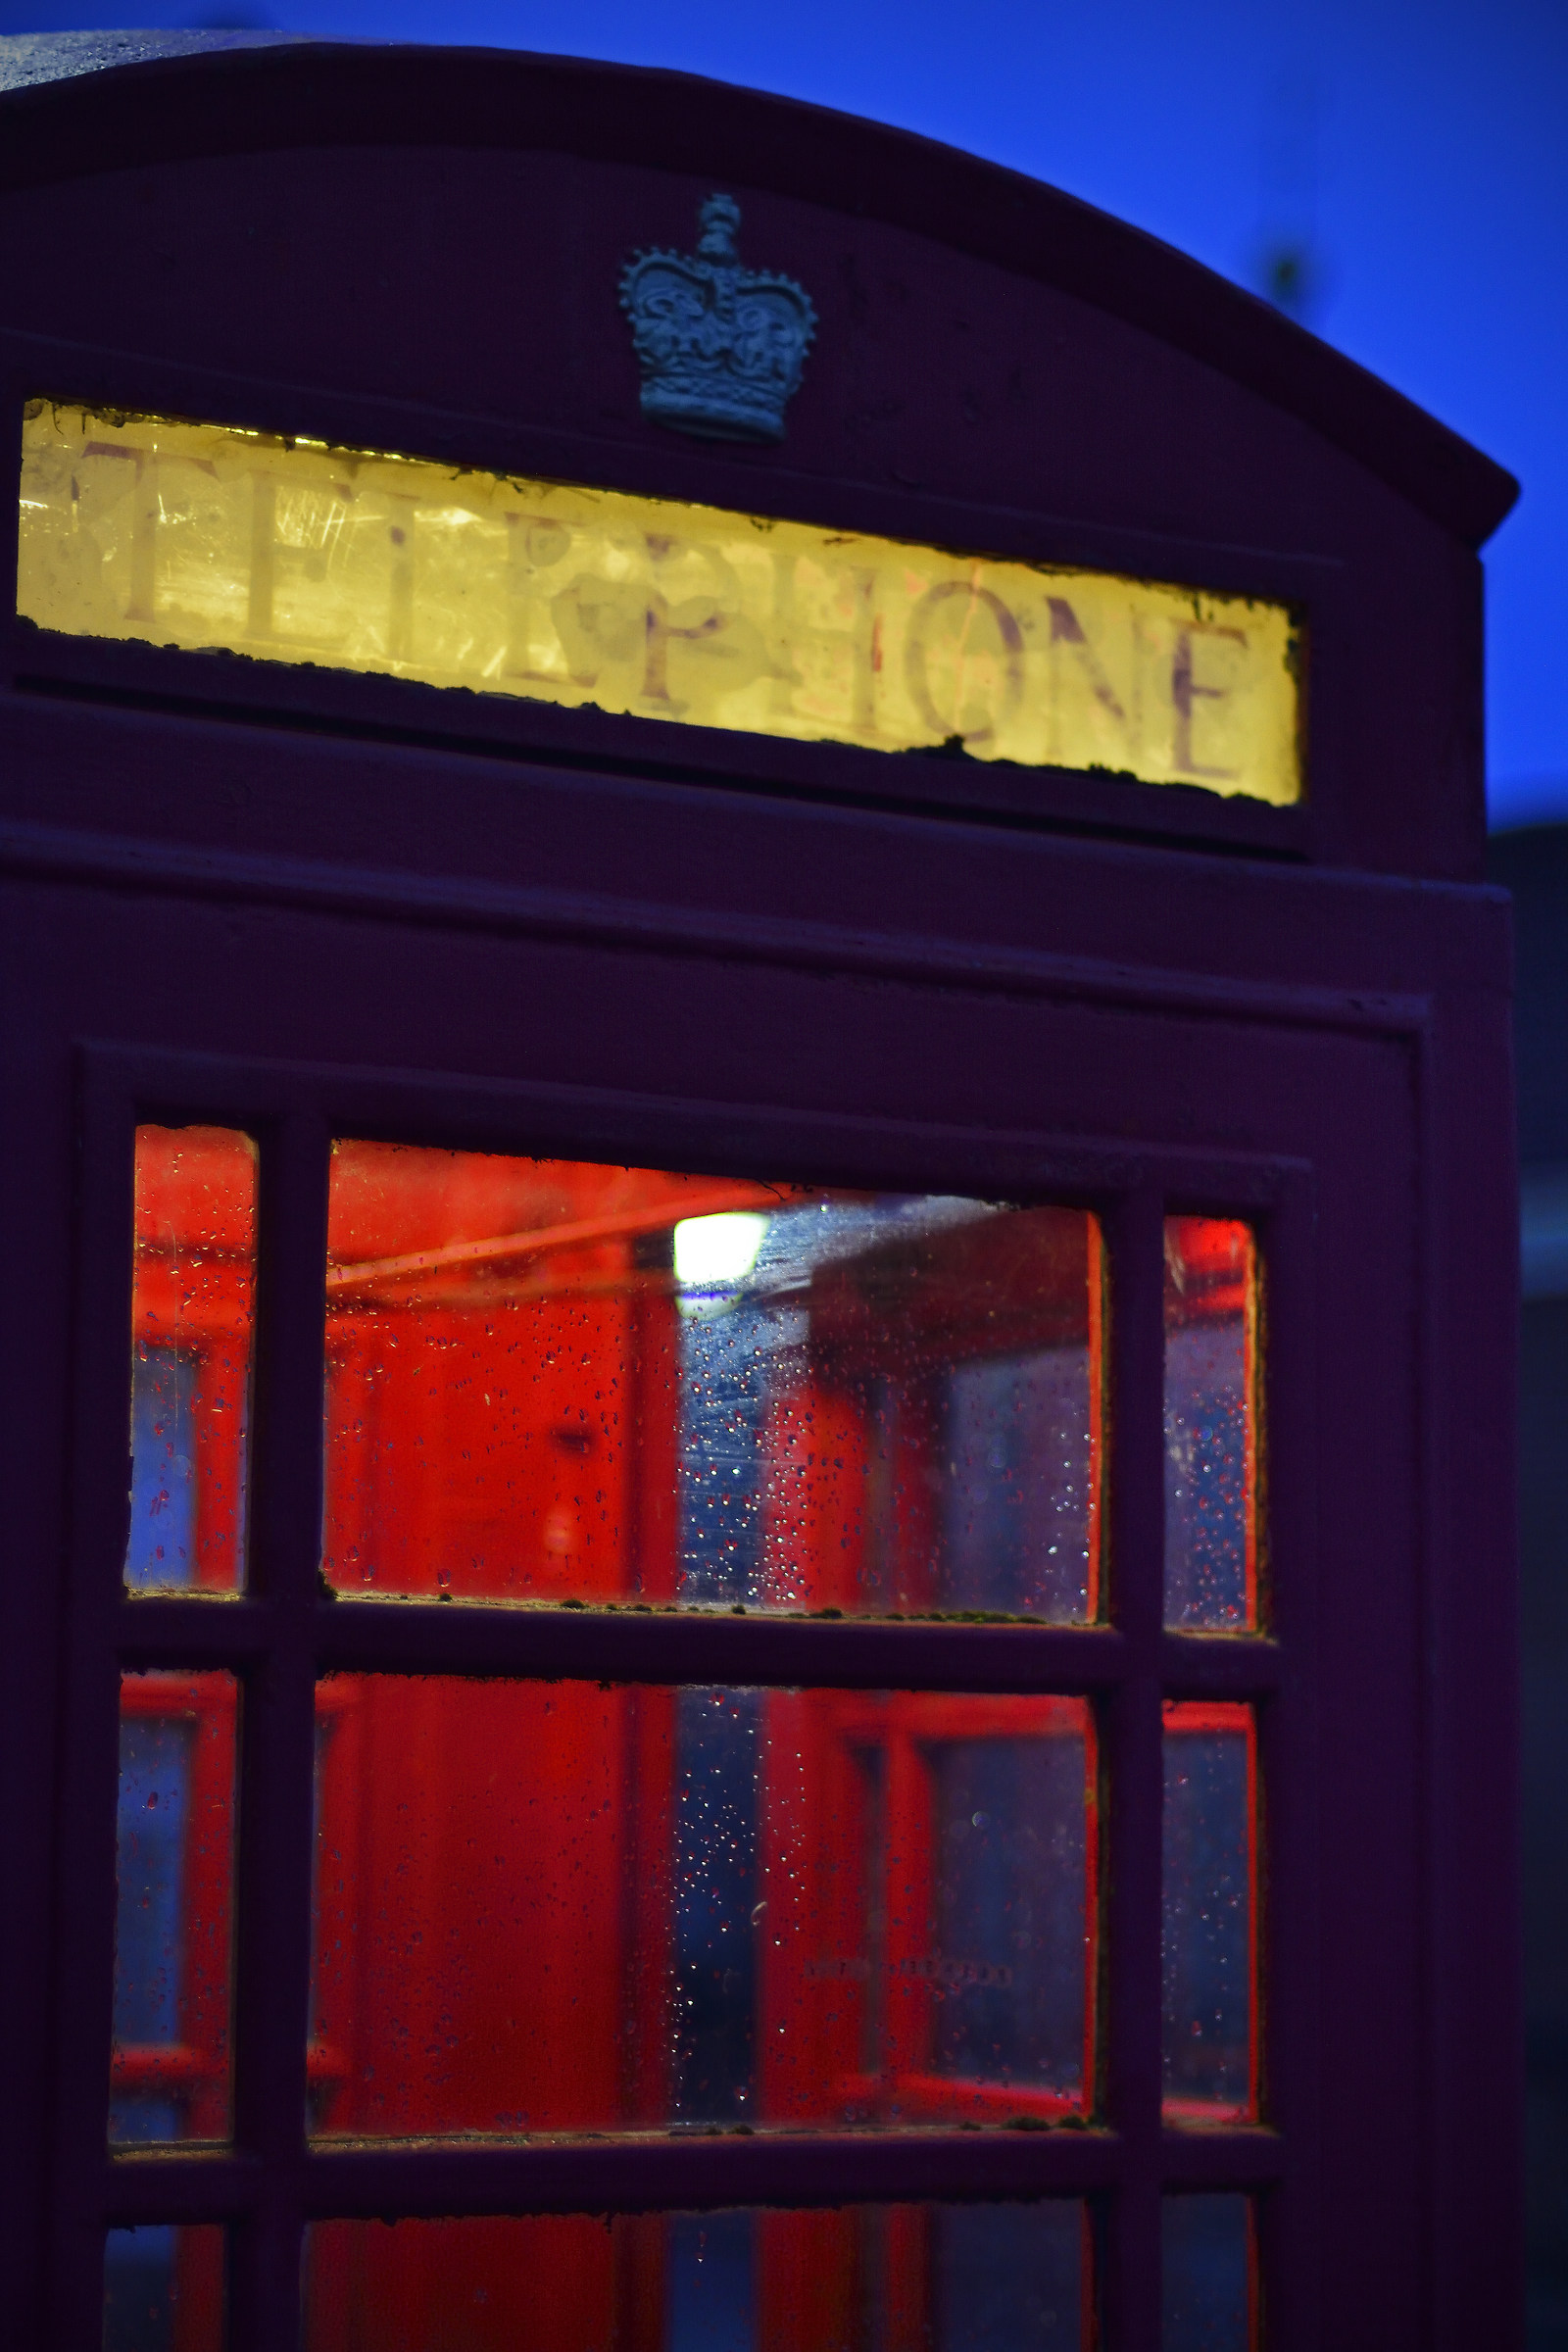 Old British Telephone Box at Dusk...